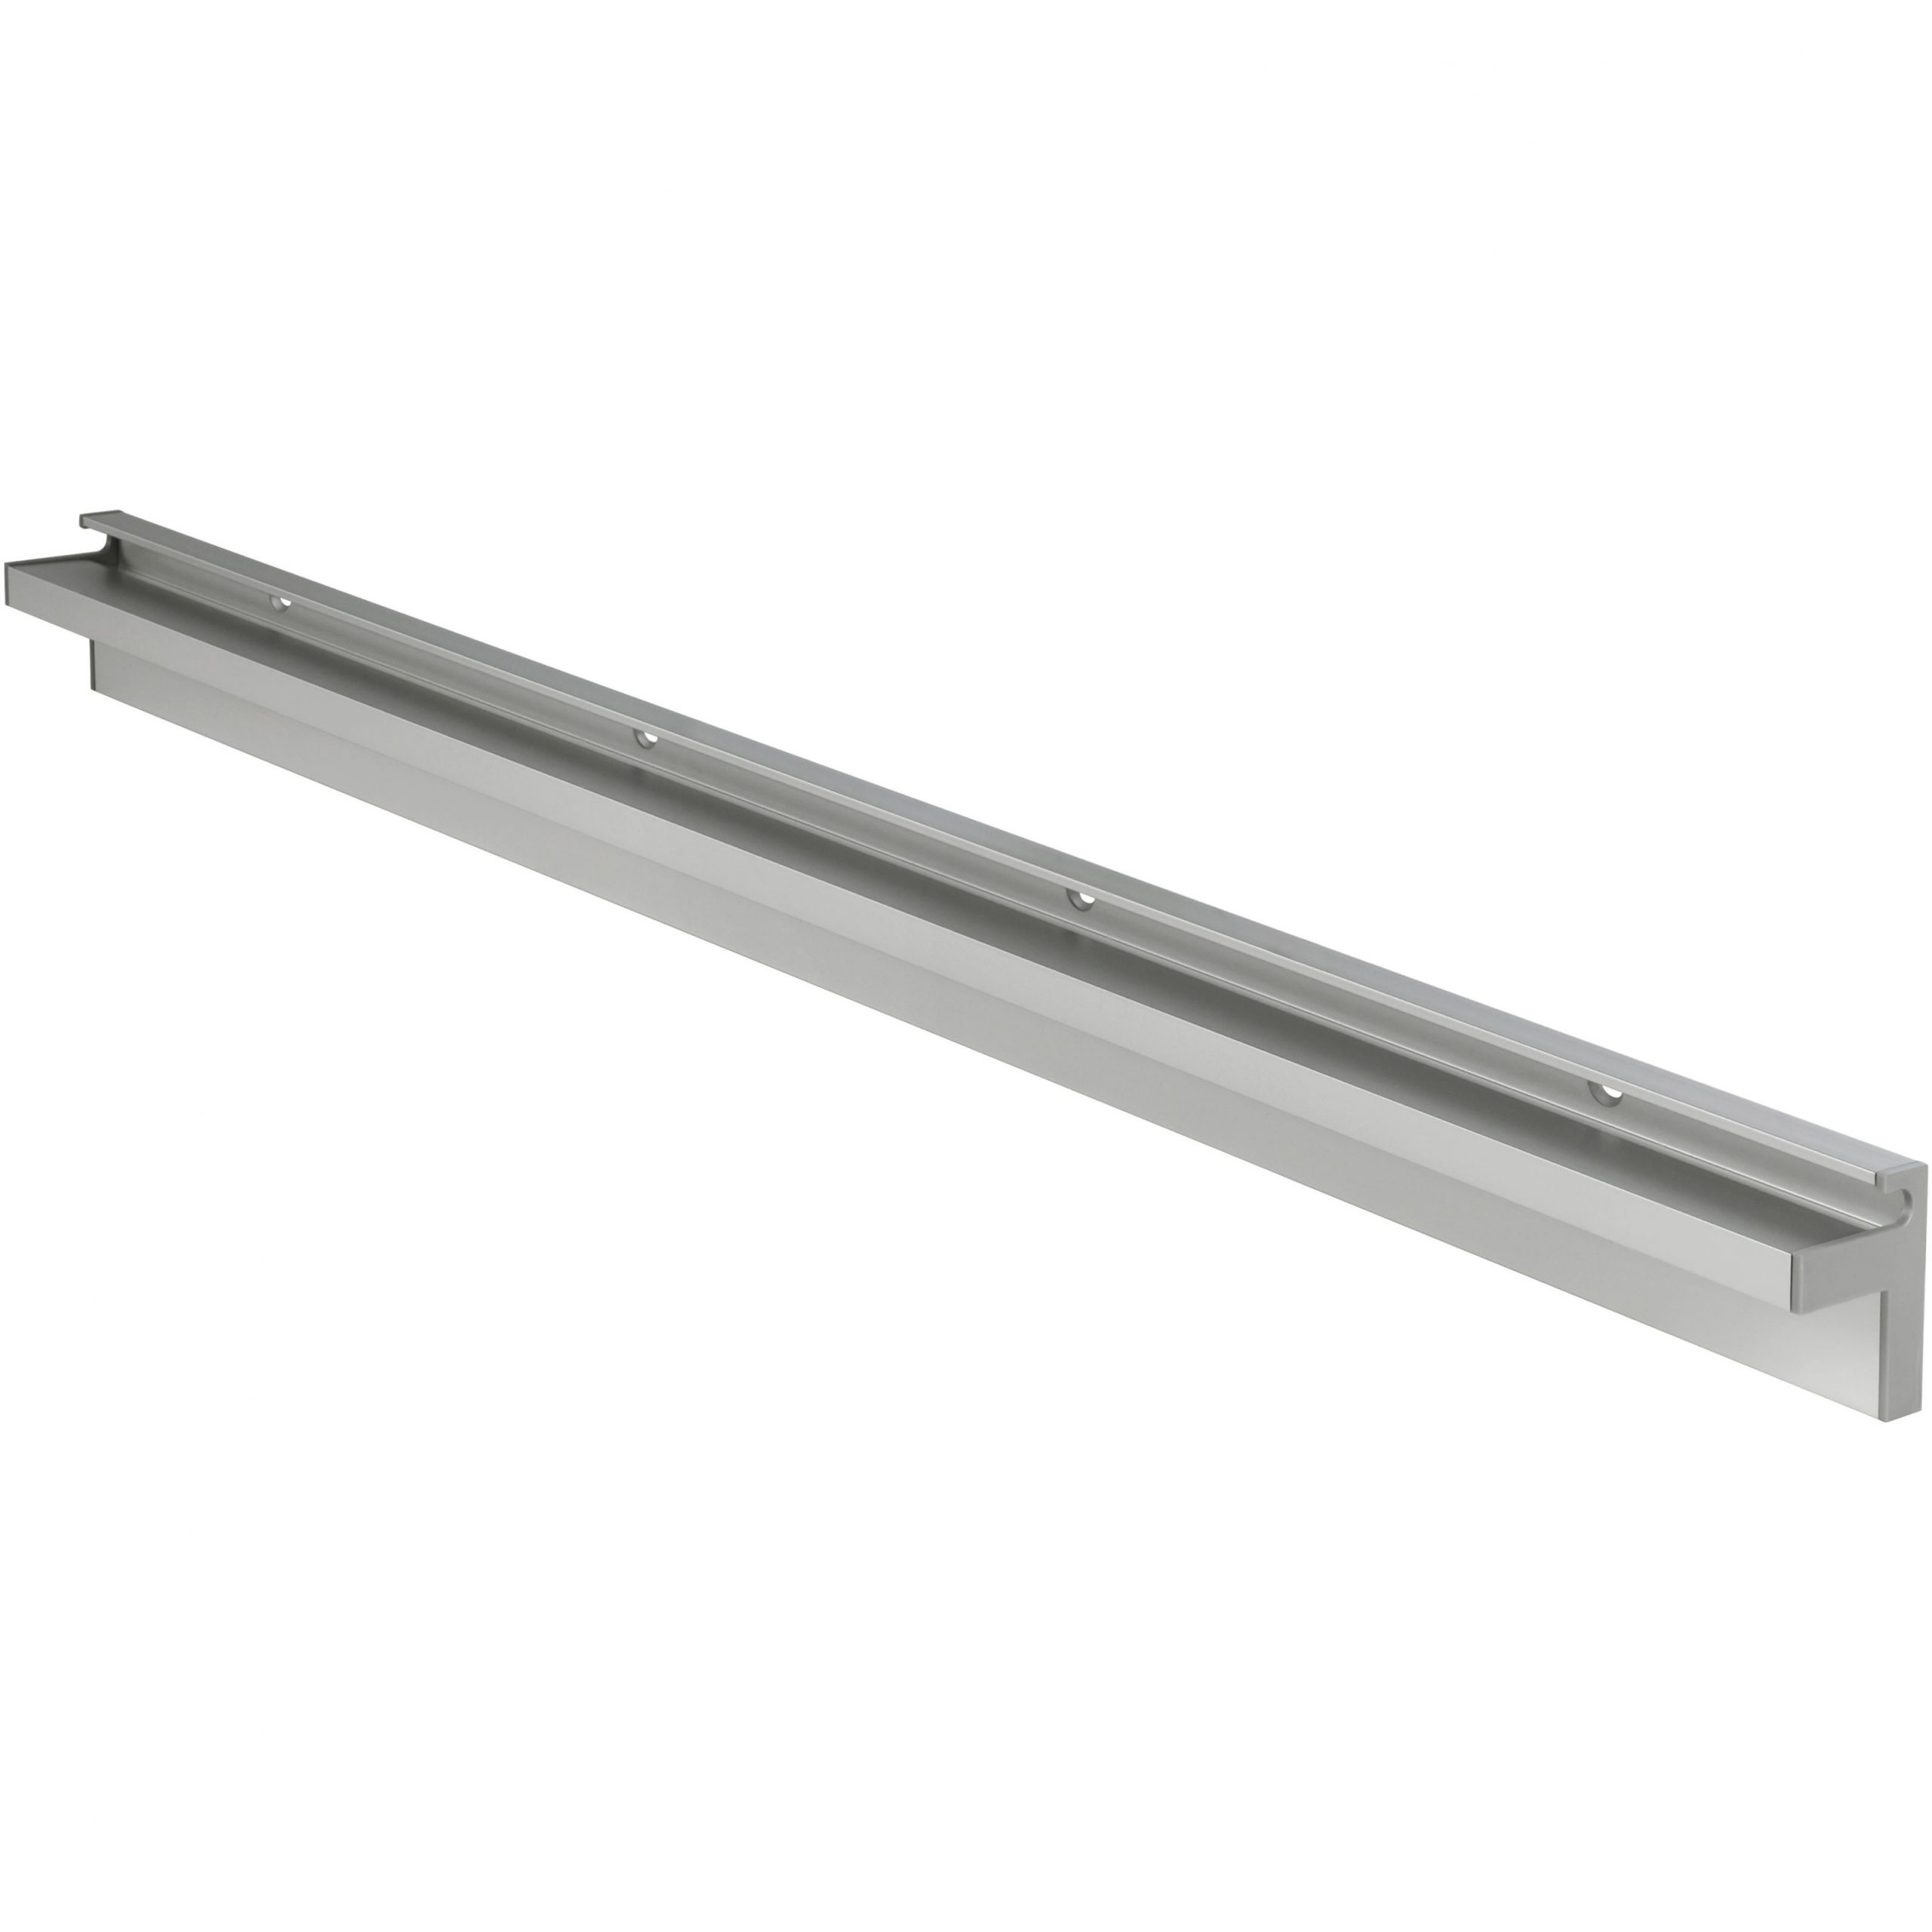 Details about   Shelf Brackets 10pcs/lot Angle Shelf Bracket Suitable For Glass Shelf Supports 